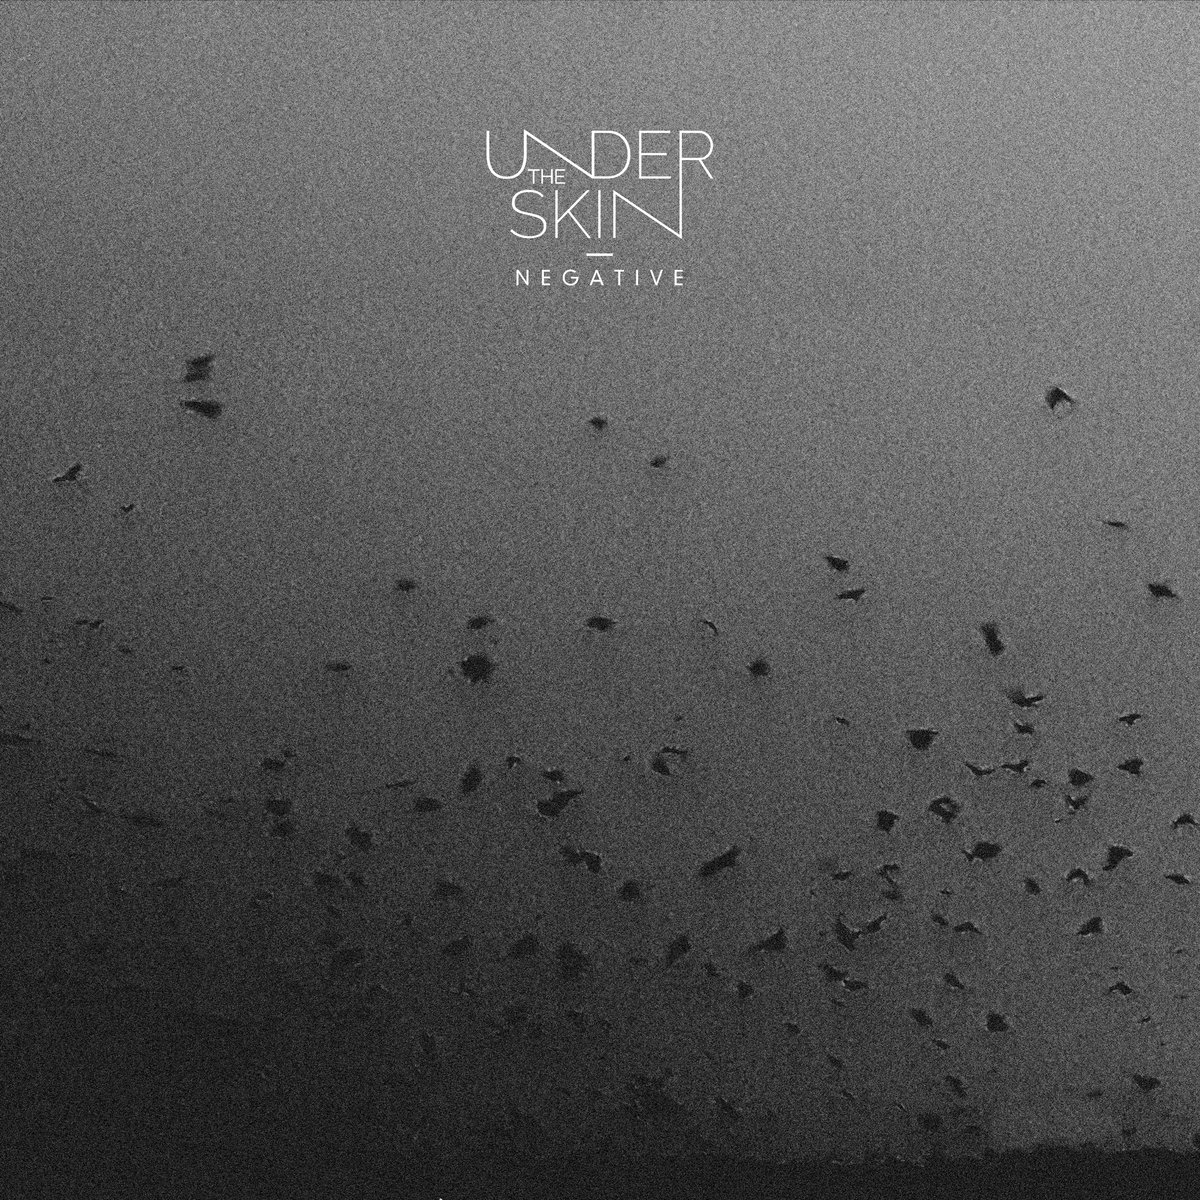 Undertheskin - Negative (LP, CD, digital; 2019)